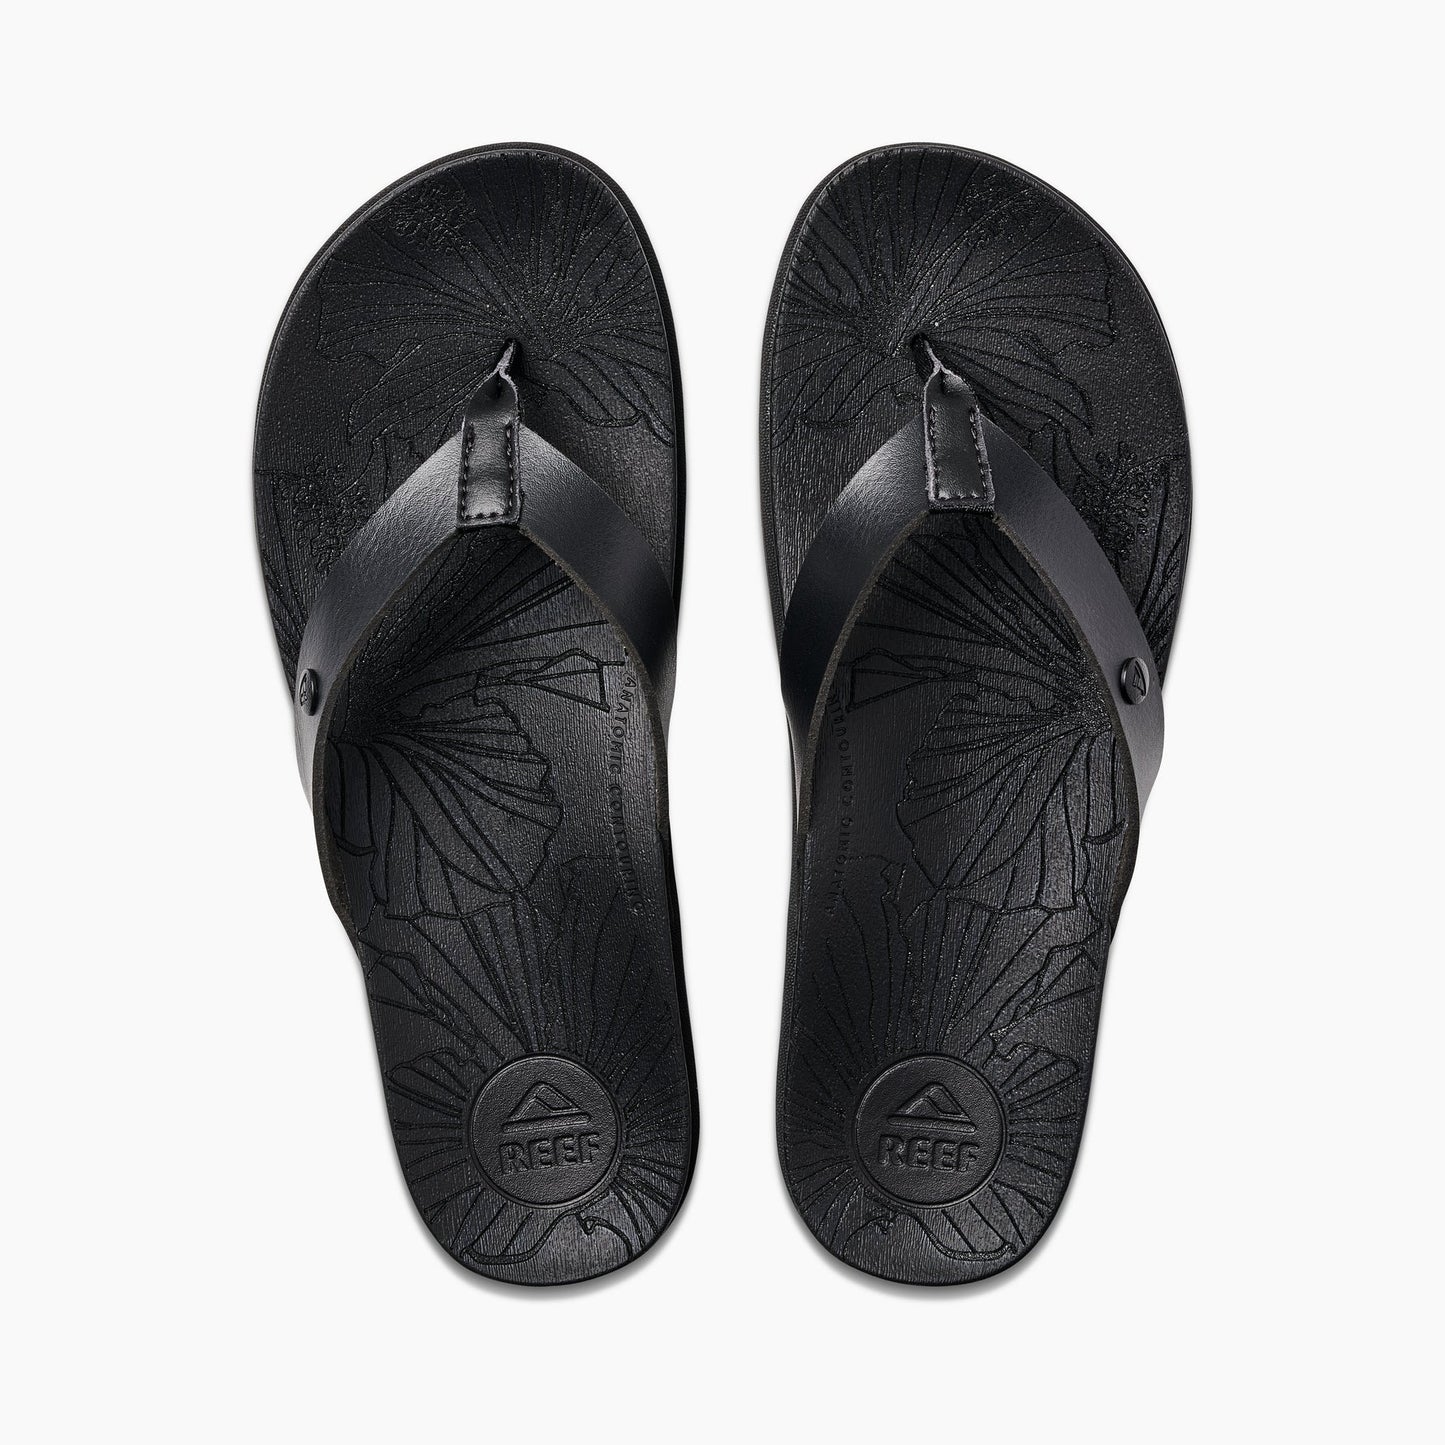 Reef Cushion Porto Cruz Women's Sandals - Black Womens Footwear